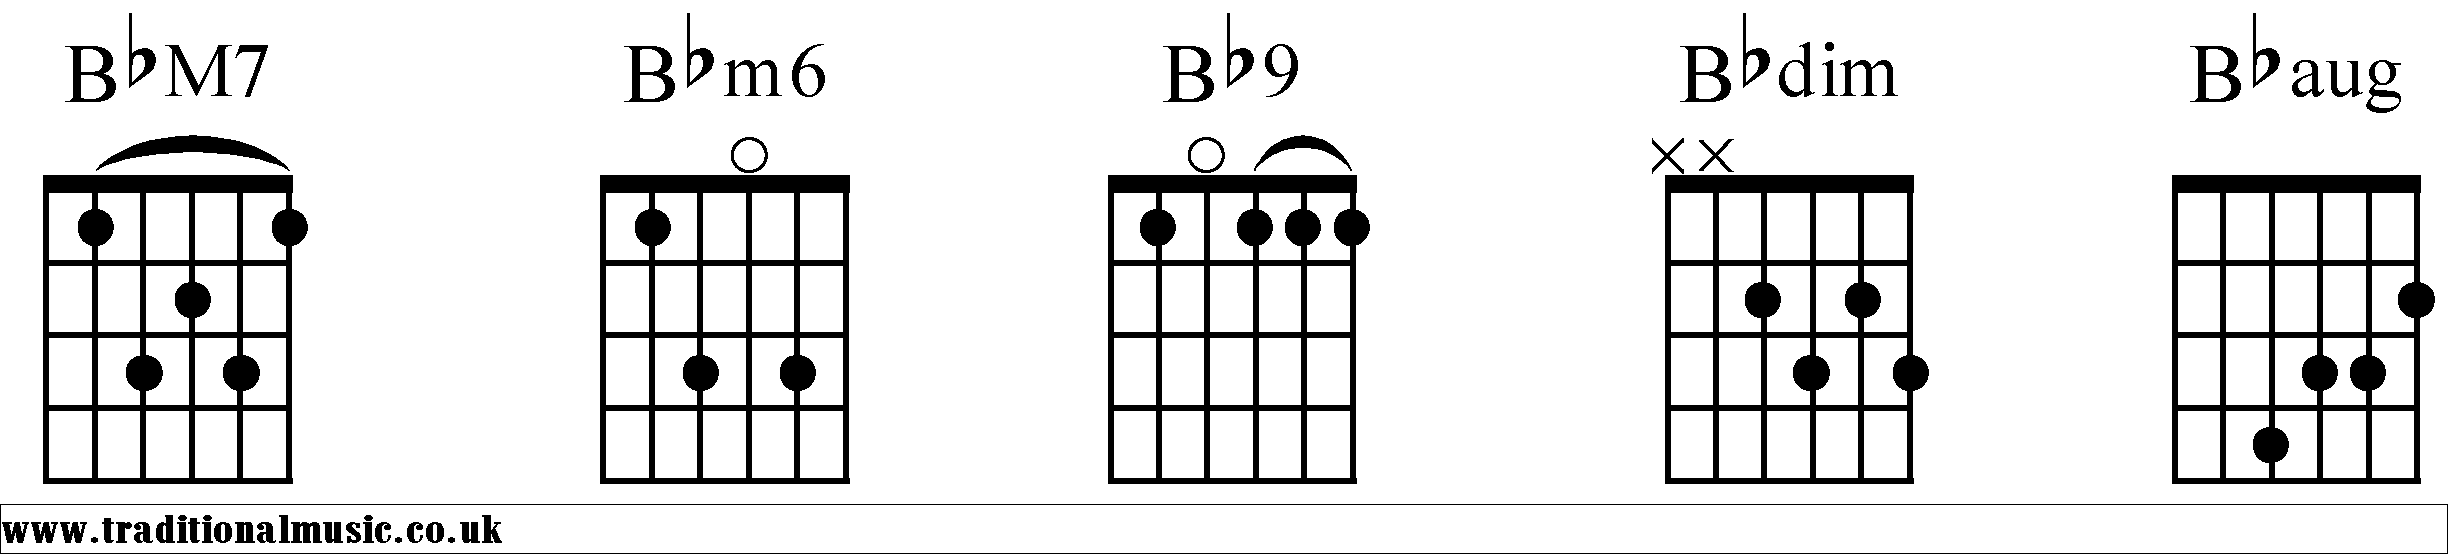 Bb Chords diagrams Guitar 2